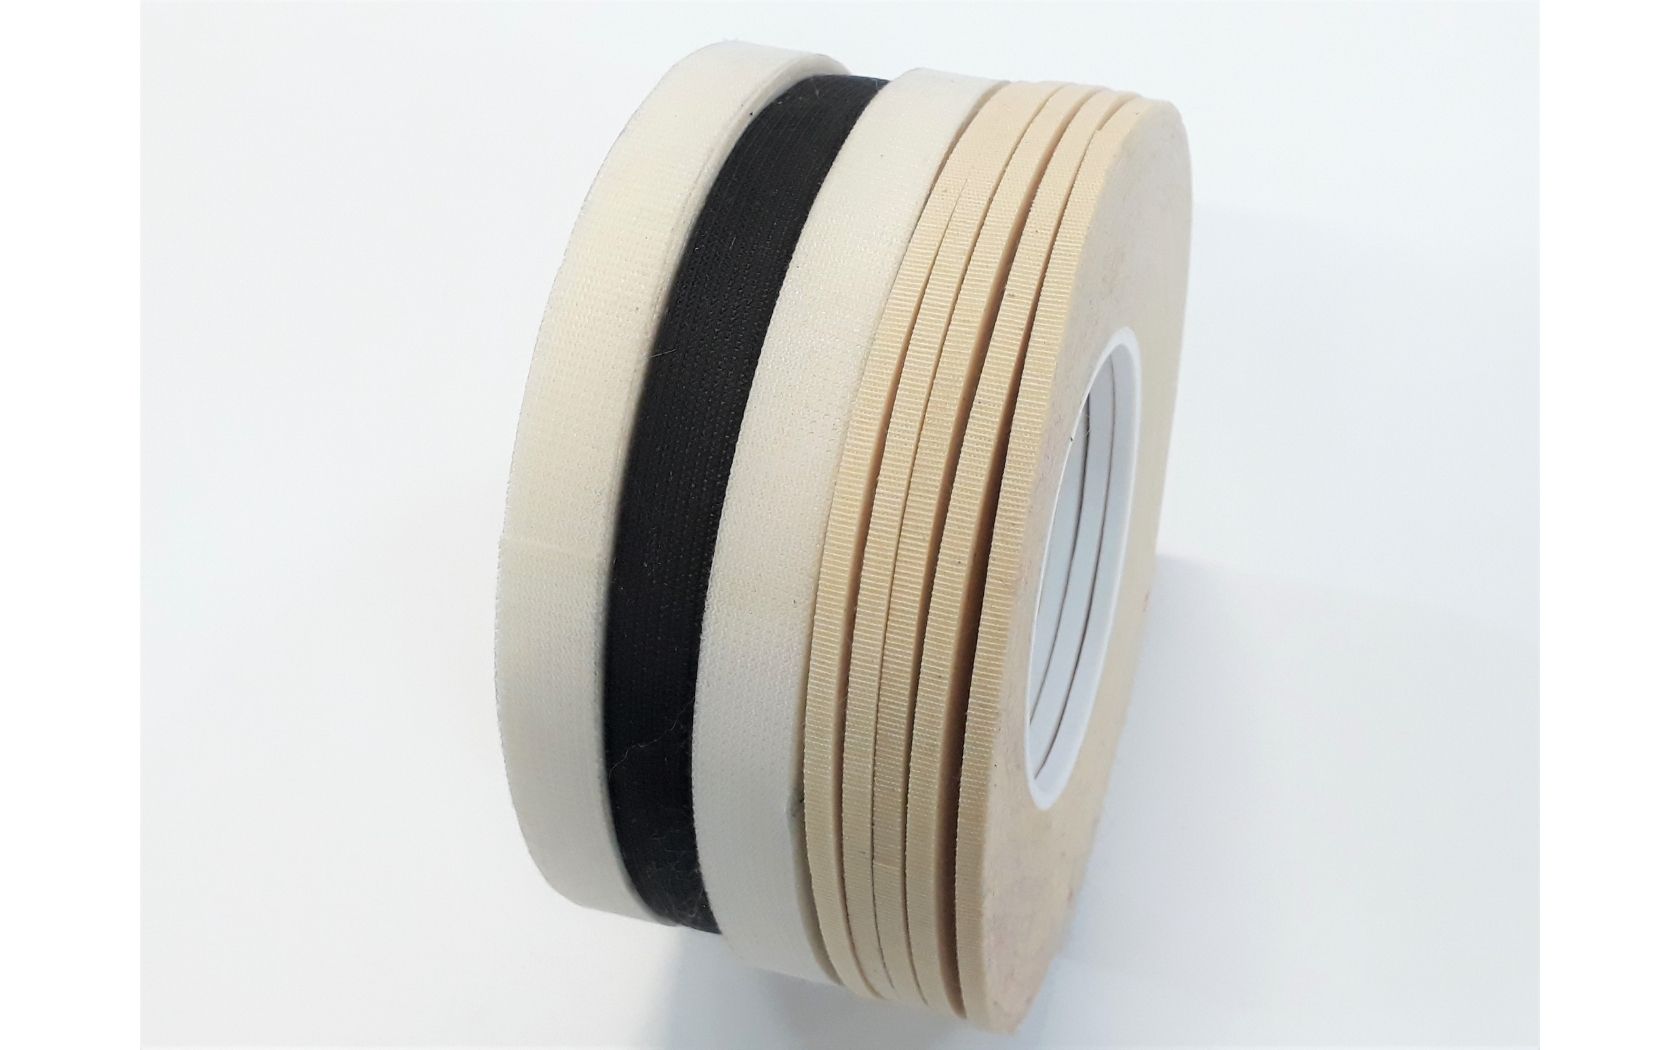 Pelletterie - Shoe reinforcement adhesive tape